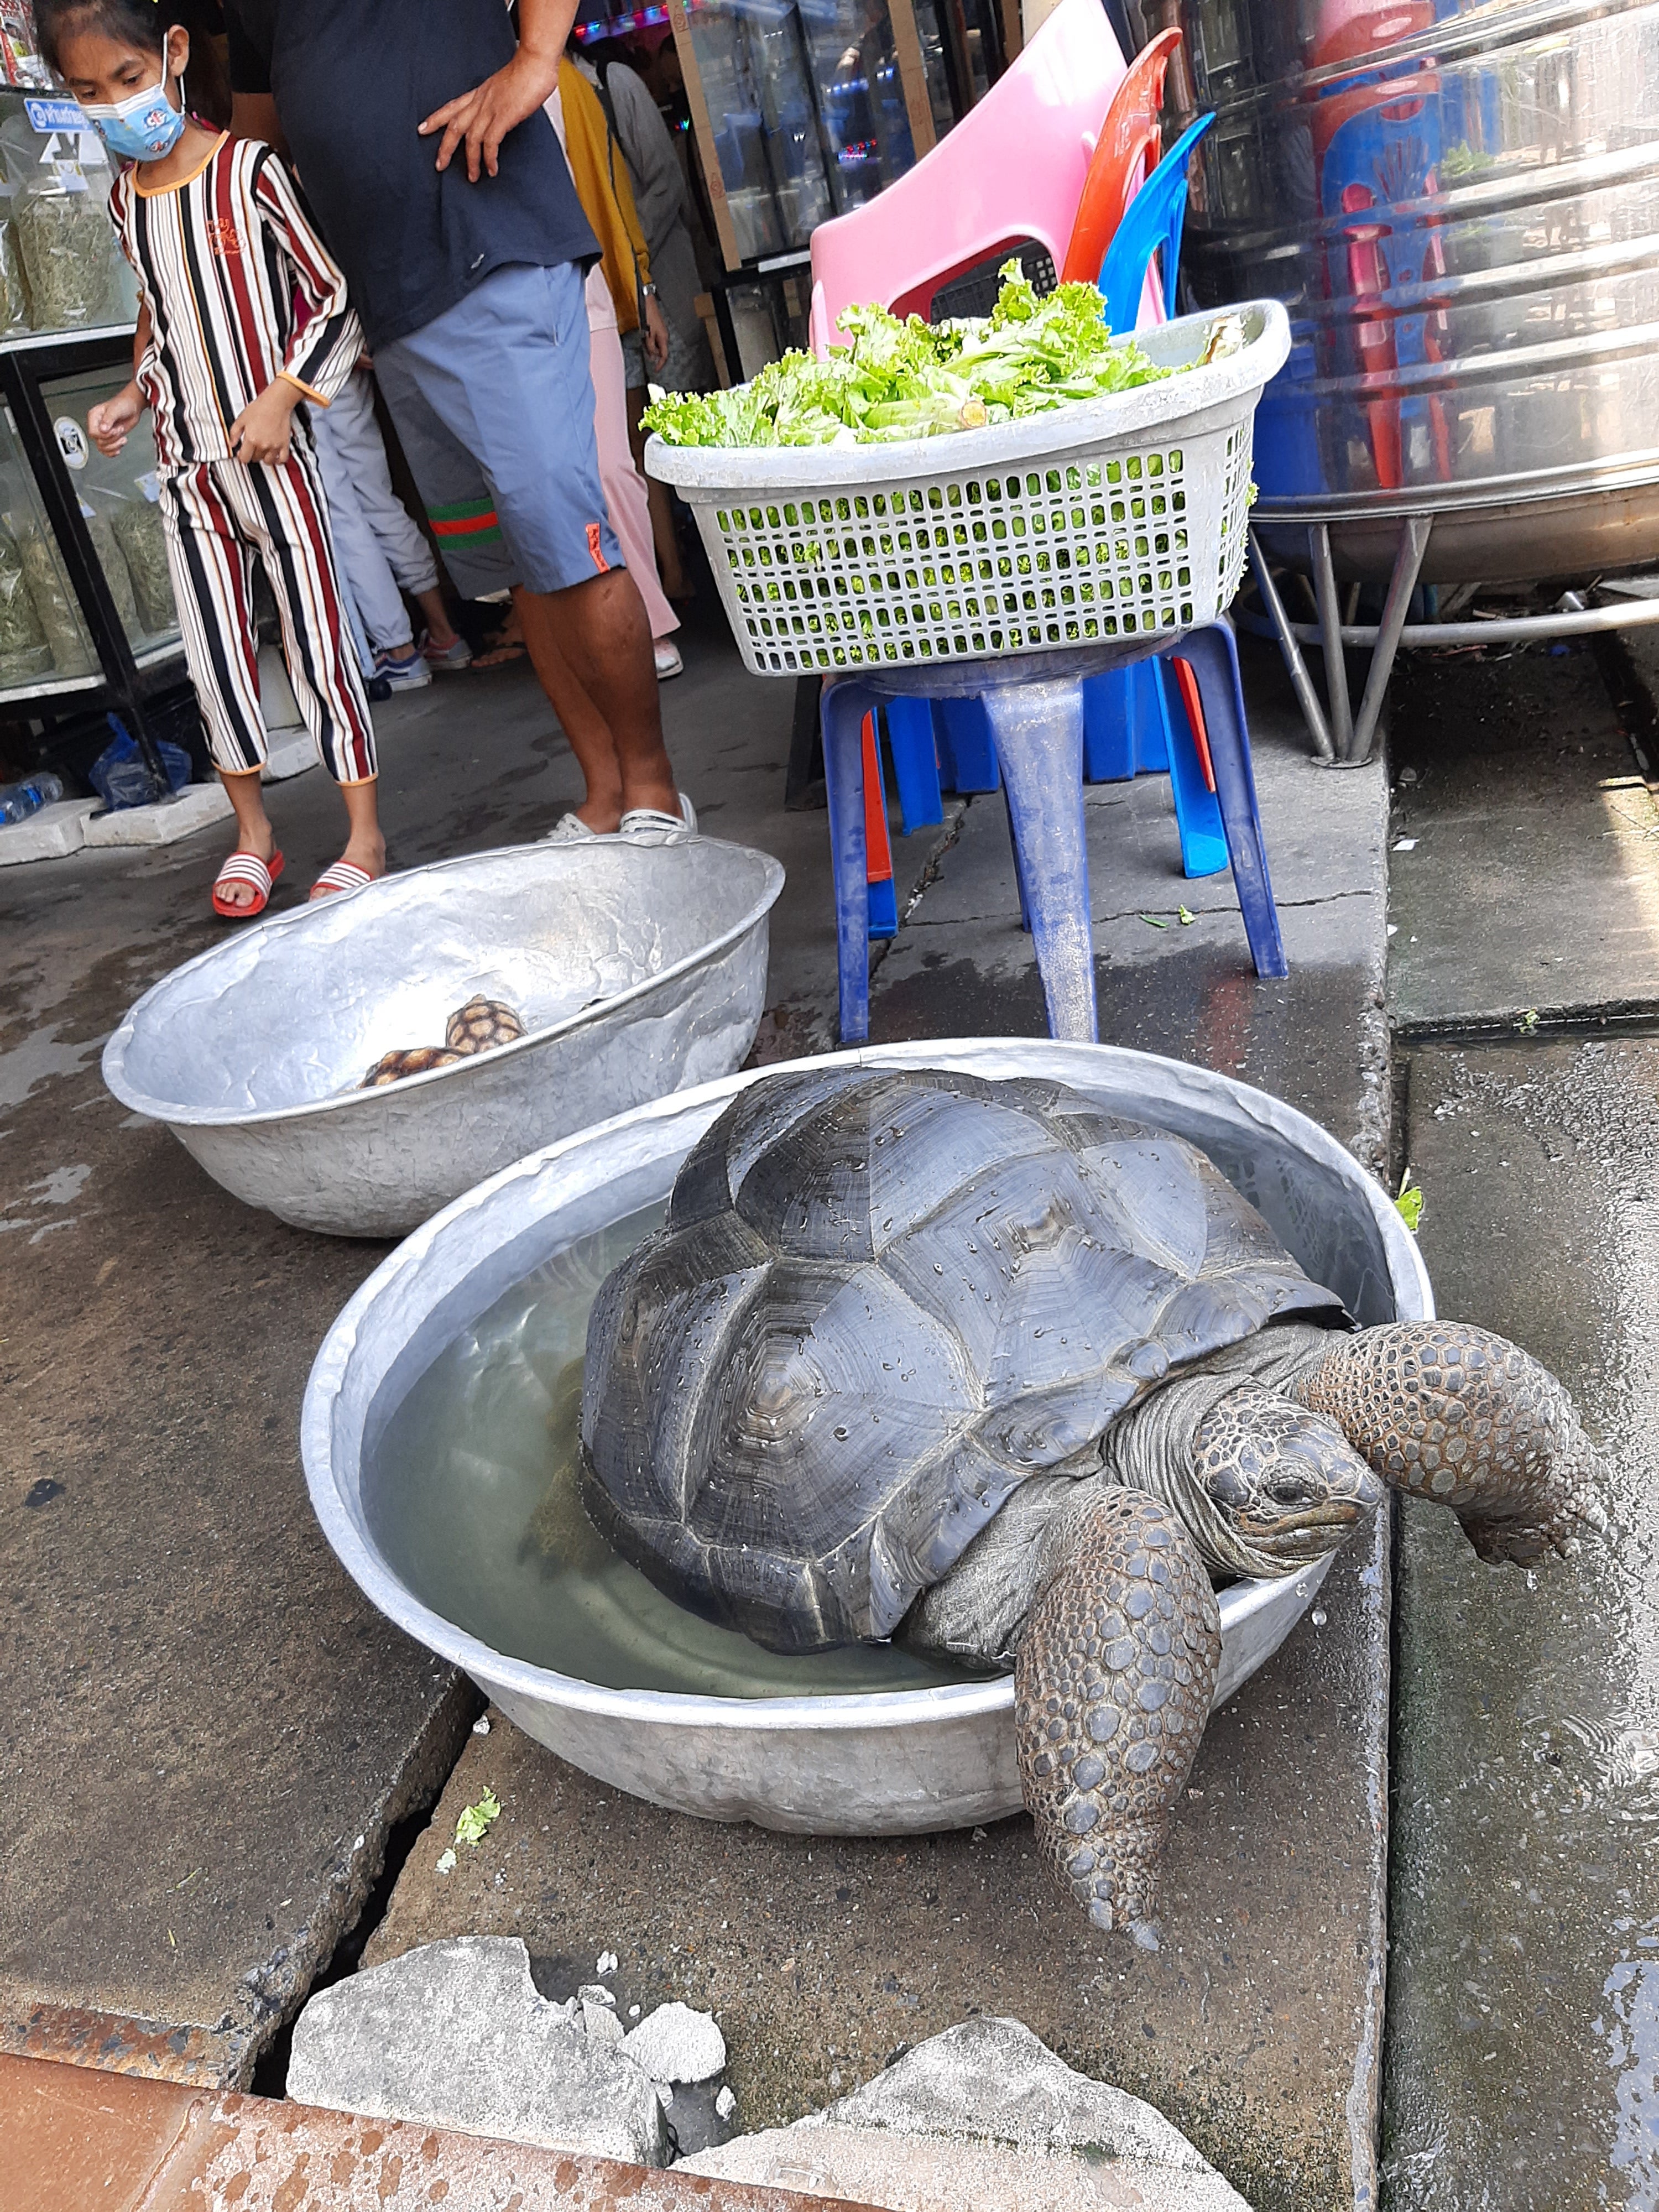 Seychelle giant land tortoise at an animal market in Bangkok